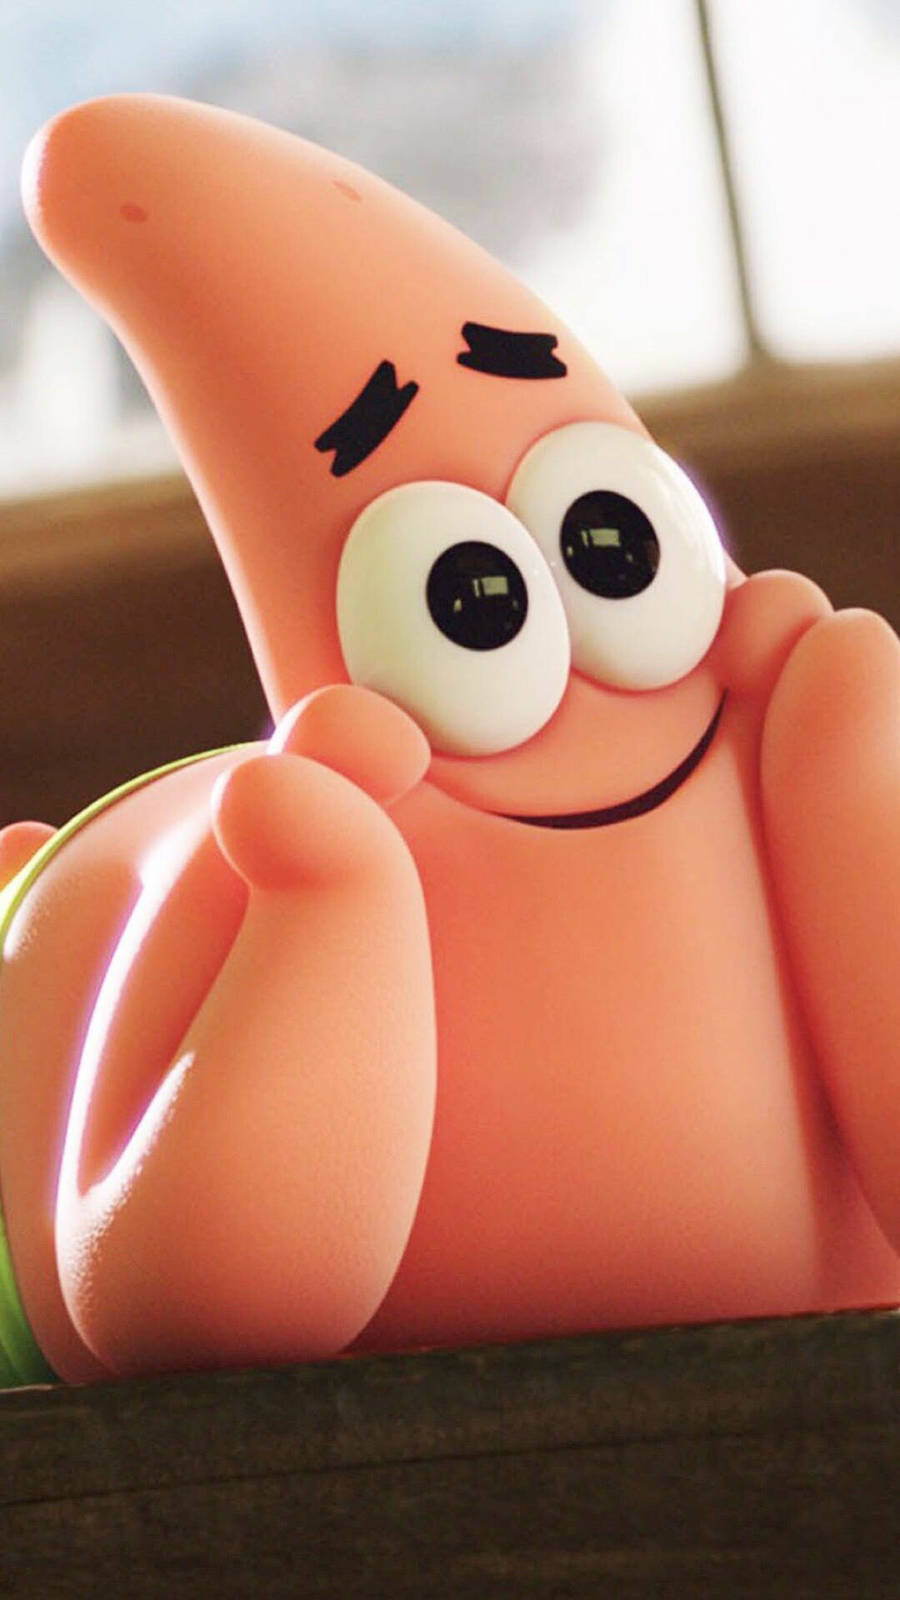 Smiling Patrick Cartoon Iphone